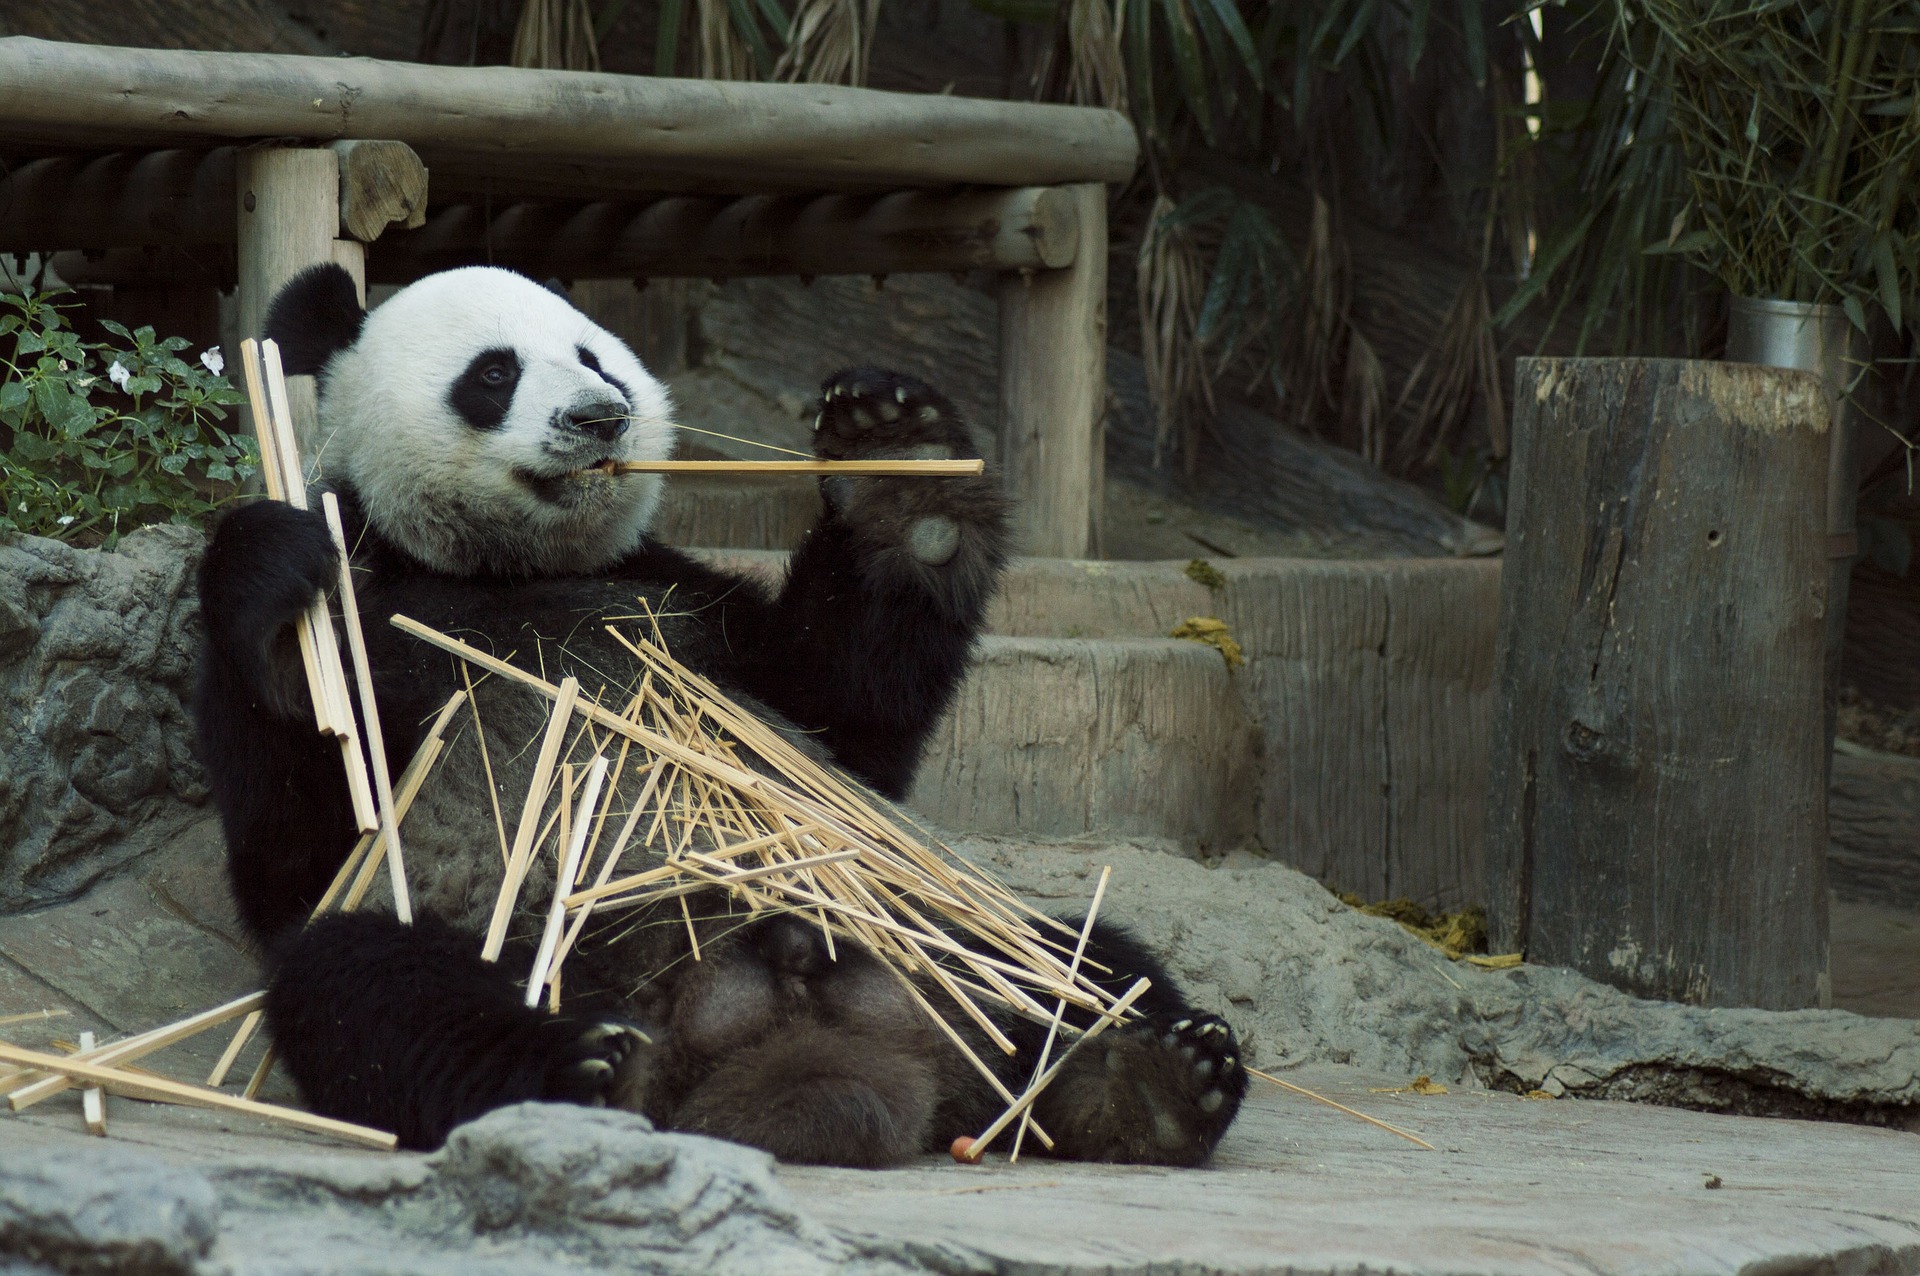 Bamboo uses, The bambu shop online. Panda